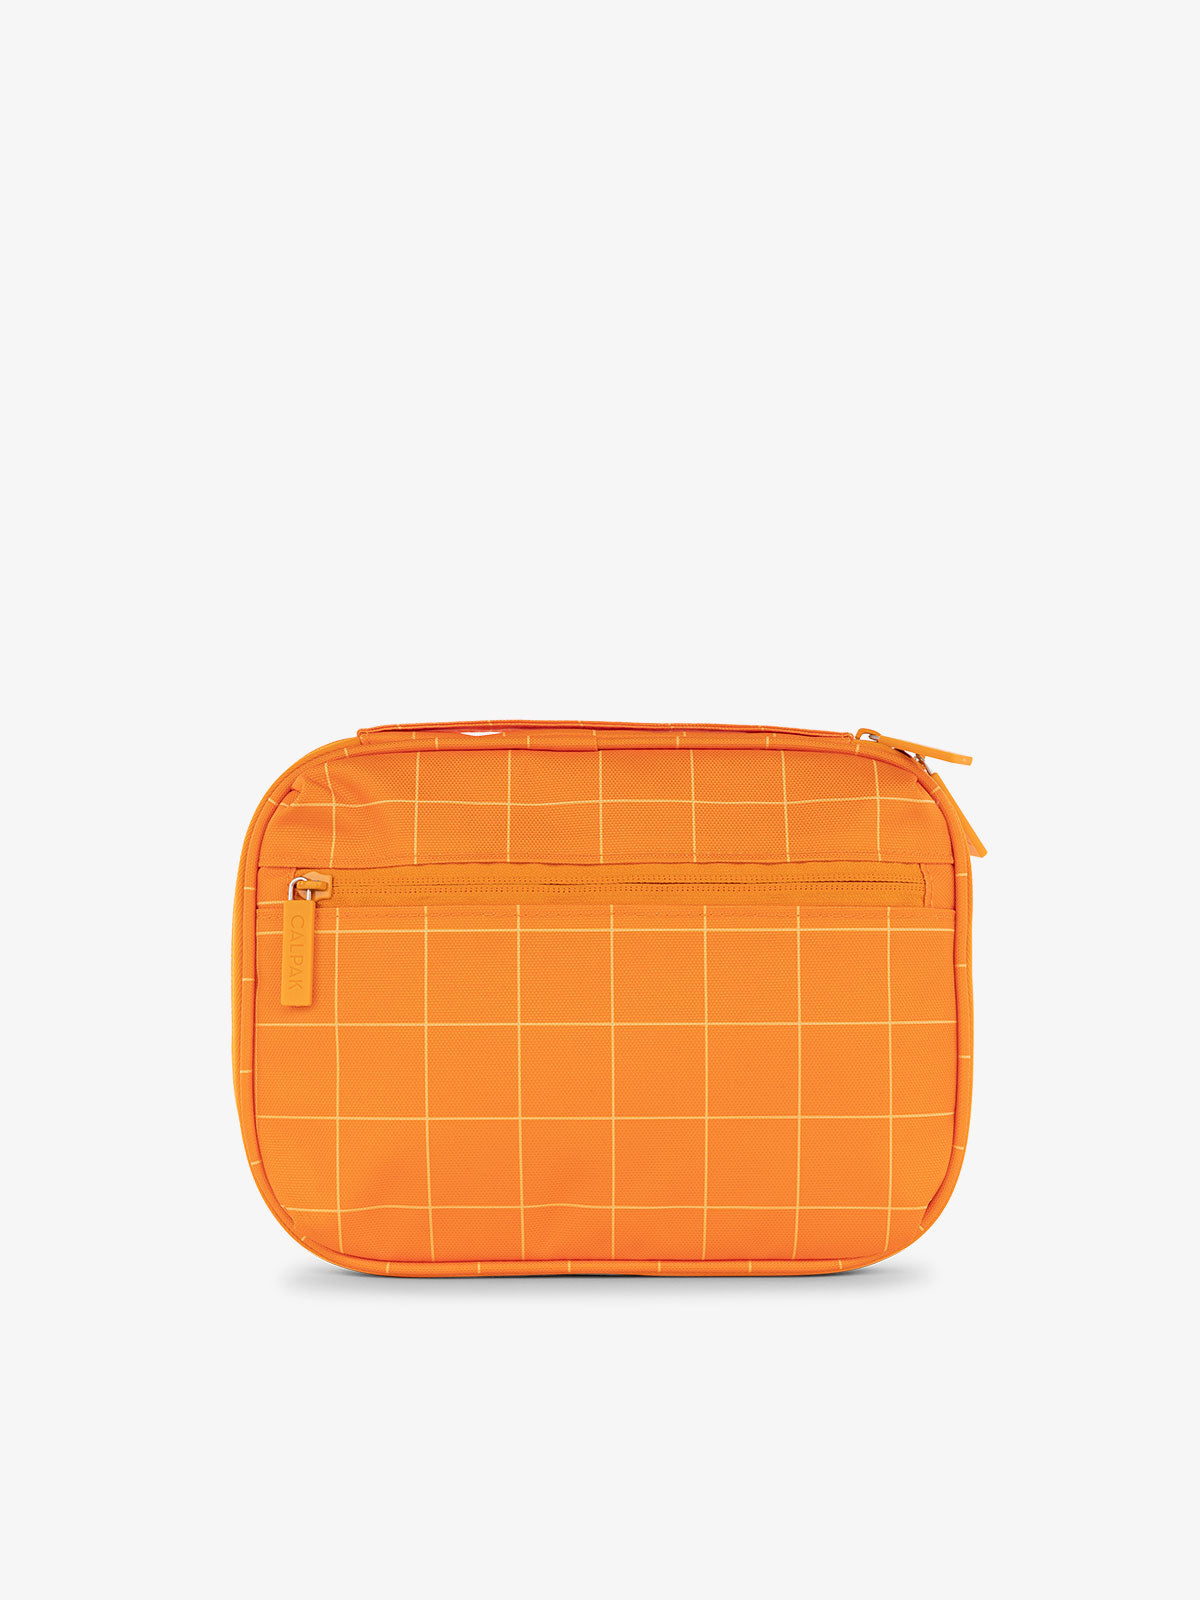 CALPAK tech and cables organizer bag in orange grid print